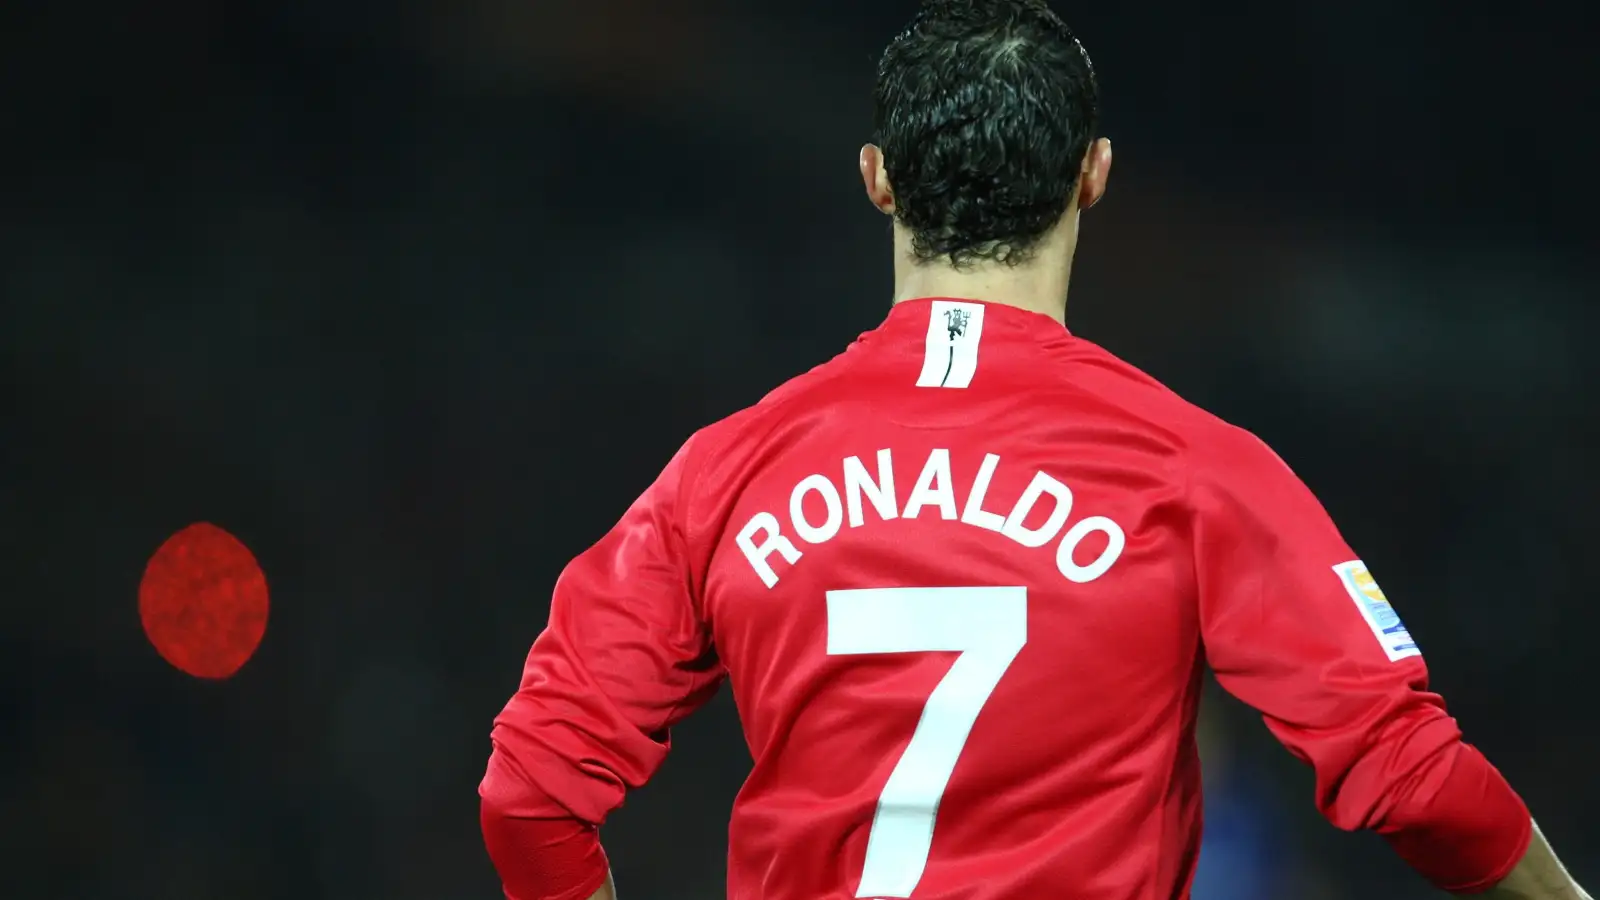 Ranking the Memorable Man Utd No. 7s since Ronaldo’s Departure: Mason Mount Joins the Legacy